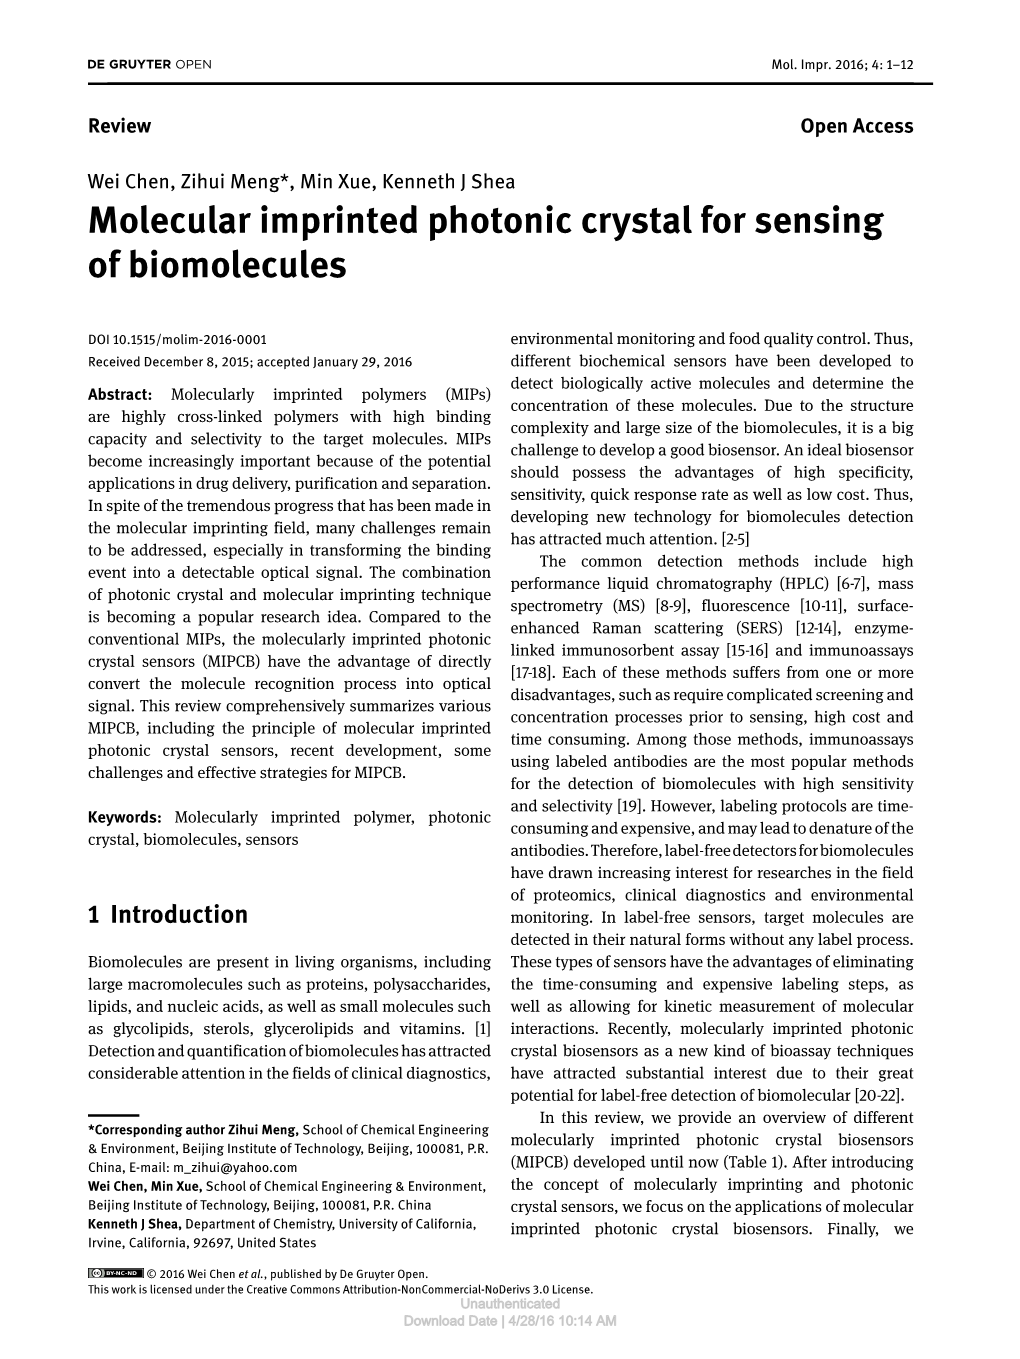 Molecular Imprinted Photonic Crystal for Sensing of Biomolecules